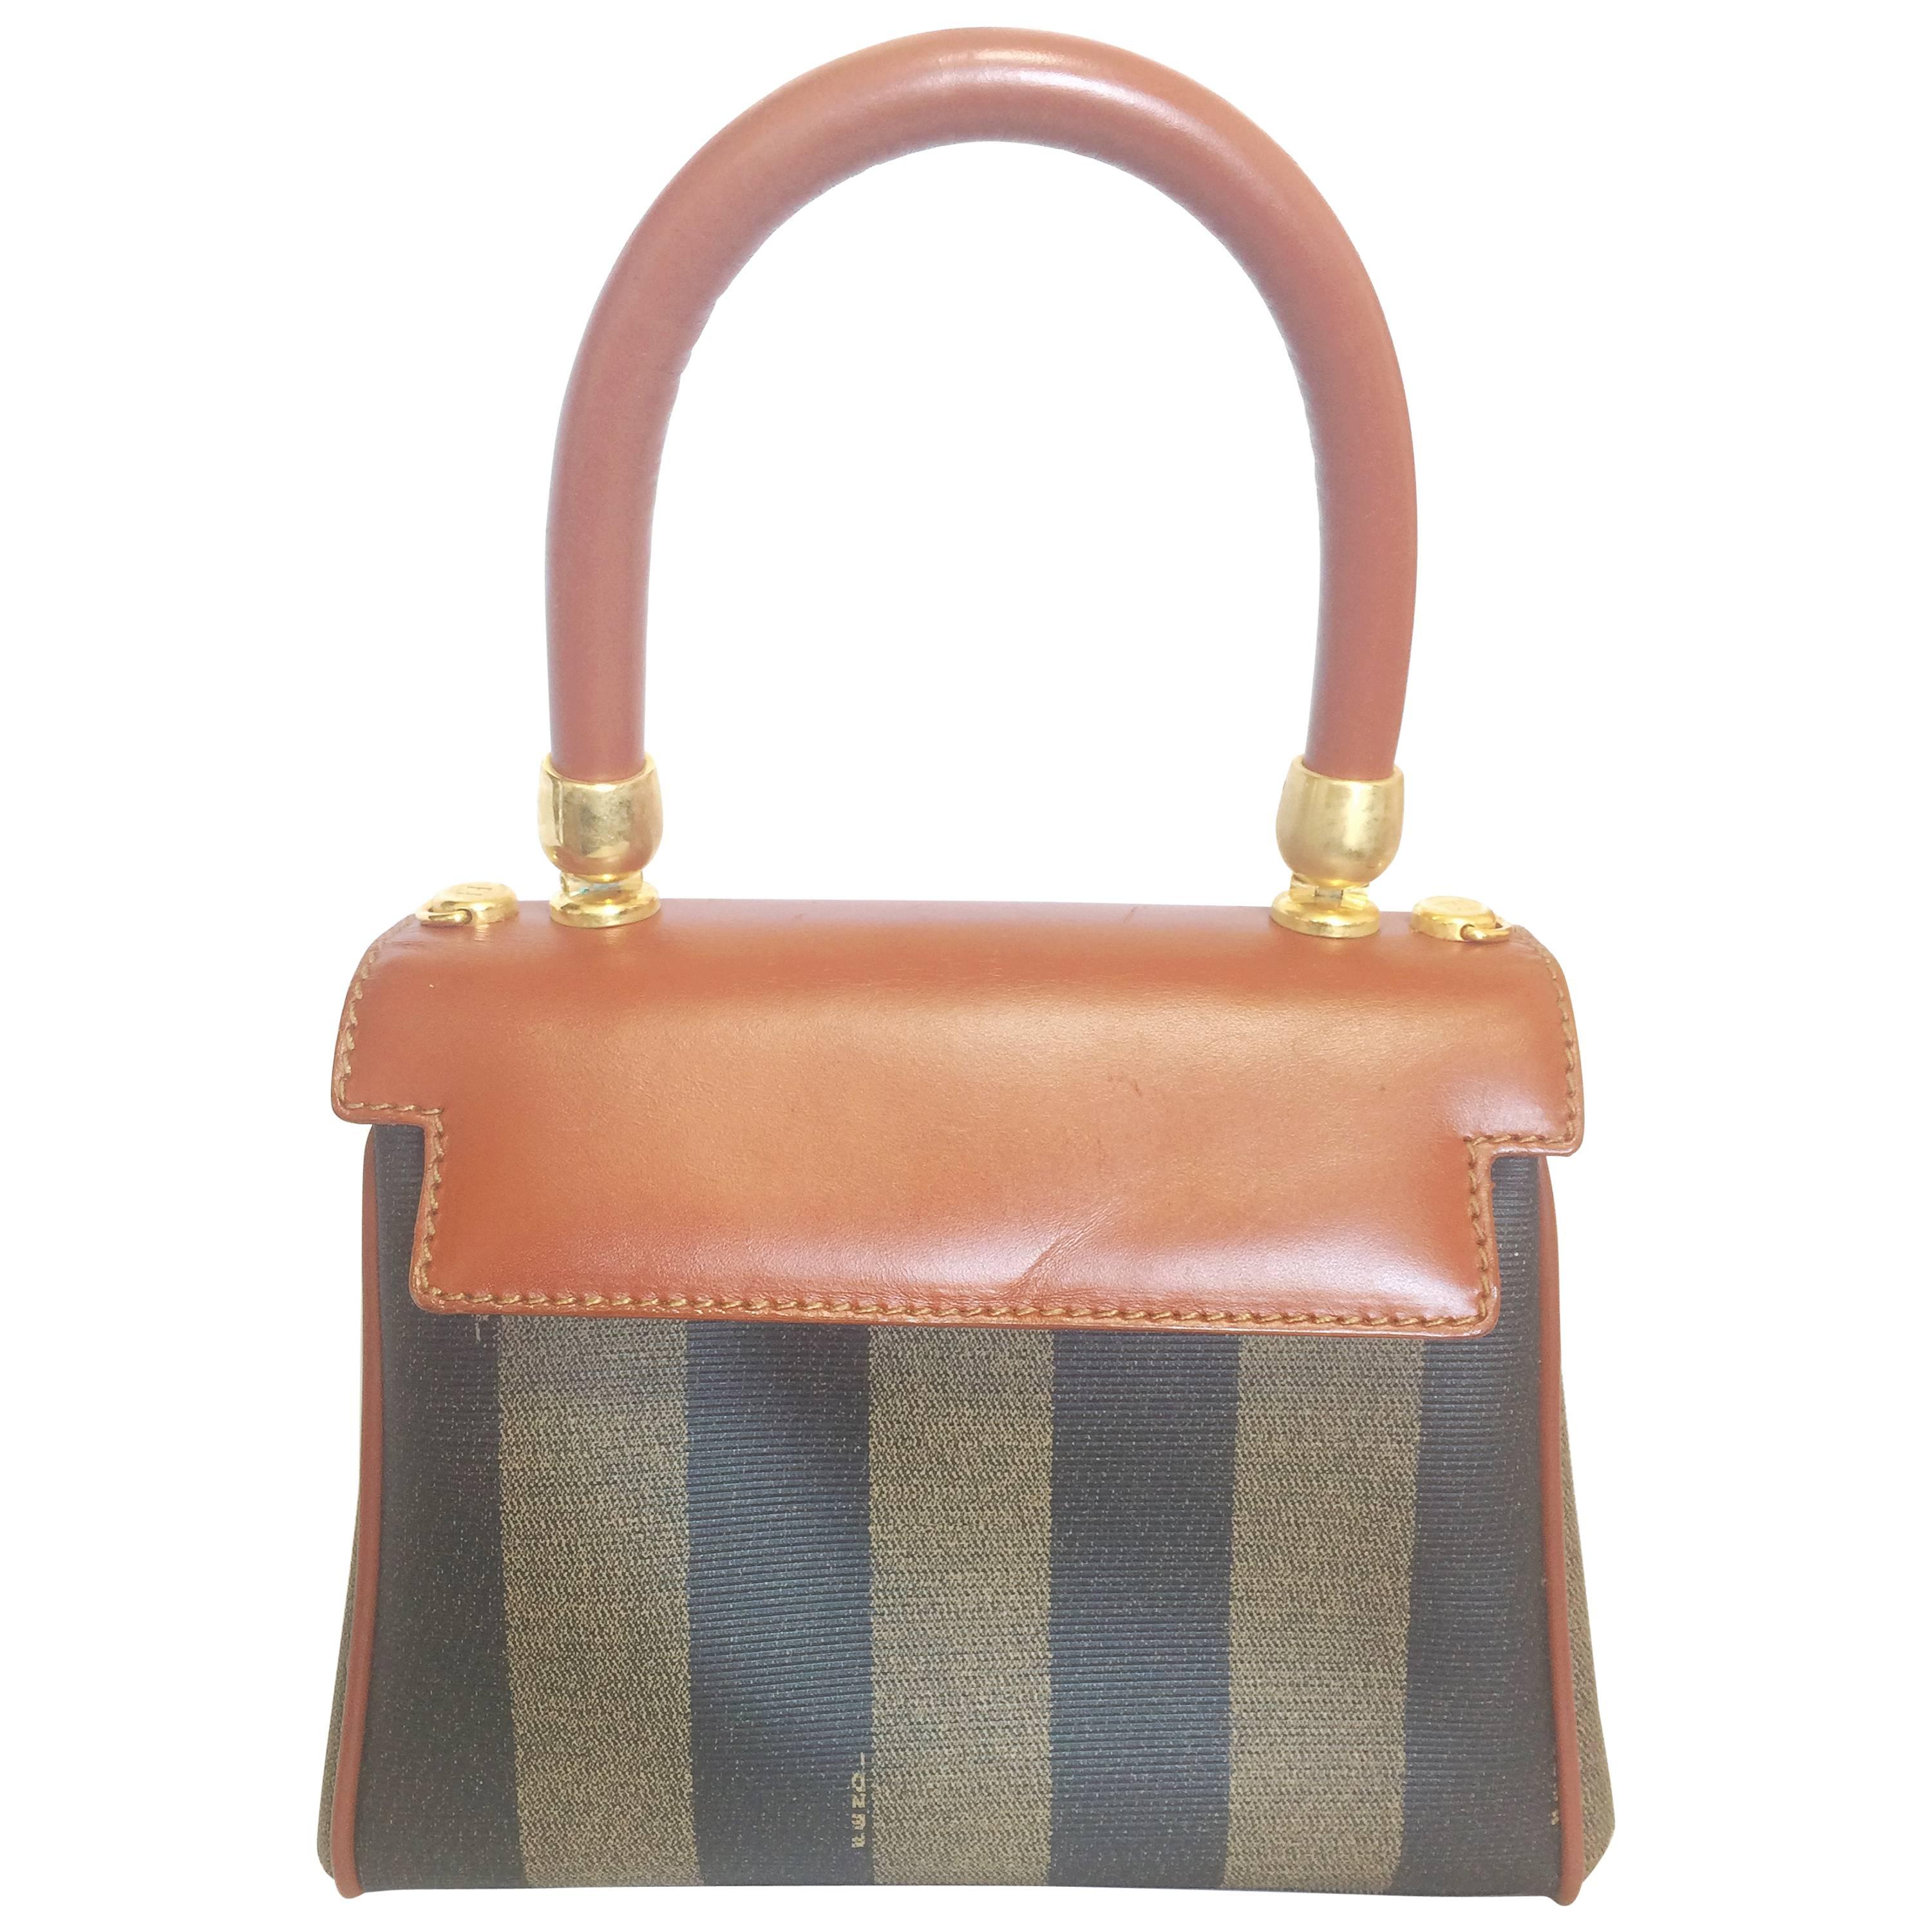 Vintage FENDI kelly bag style mini handbag in pecan stripes and brown leather